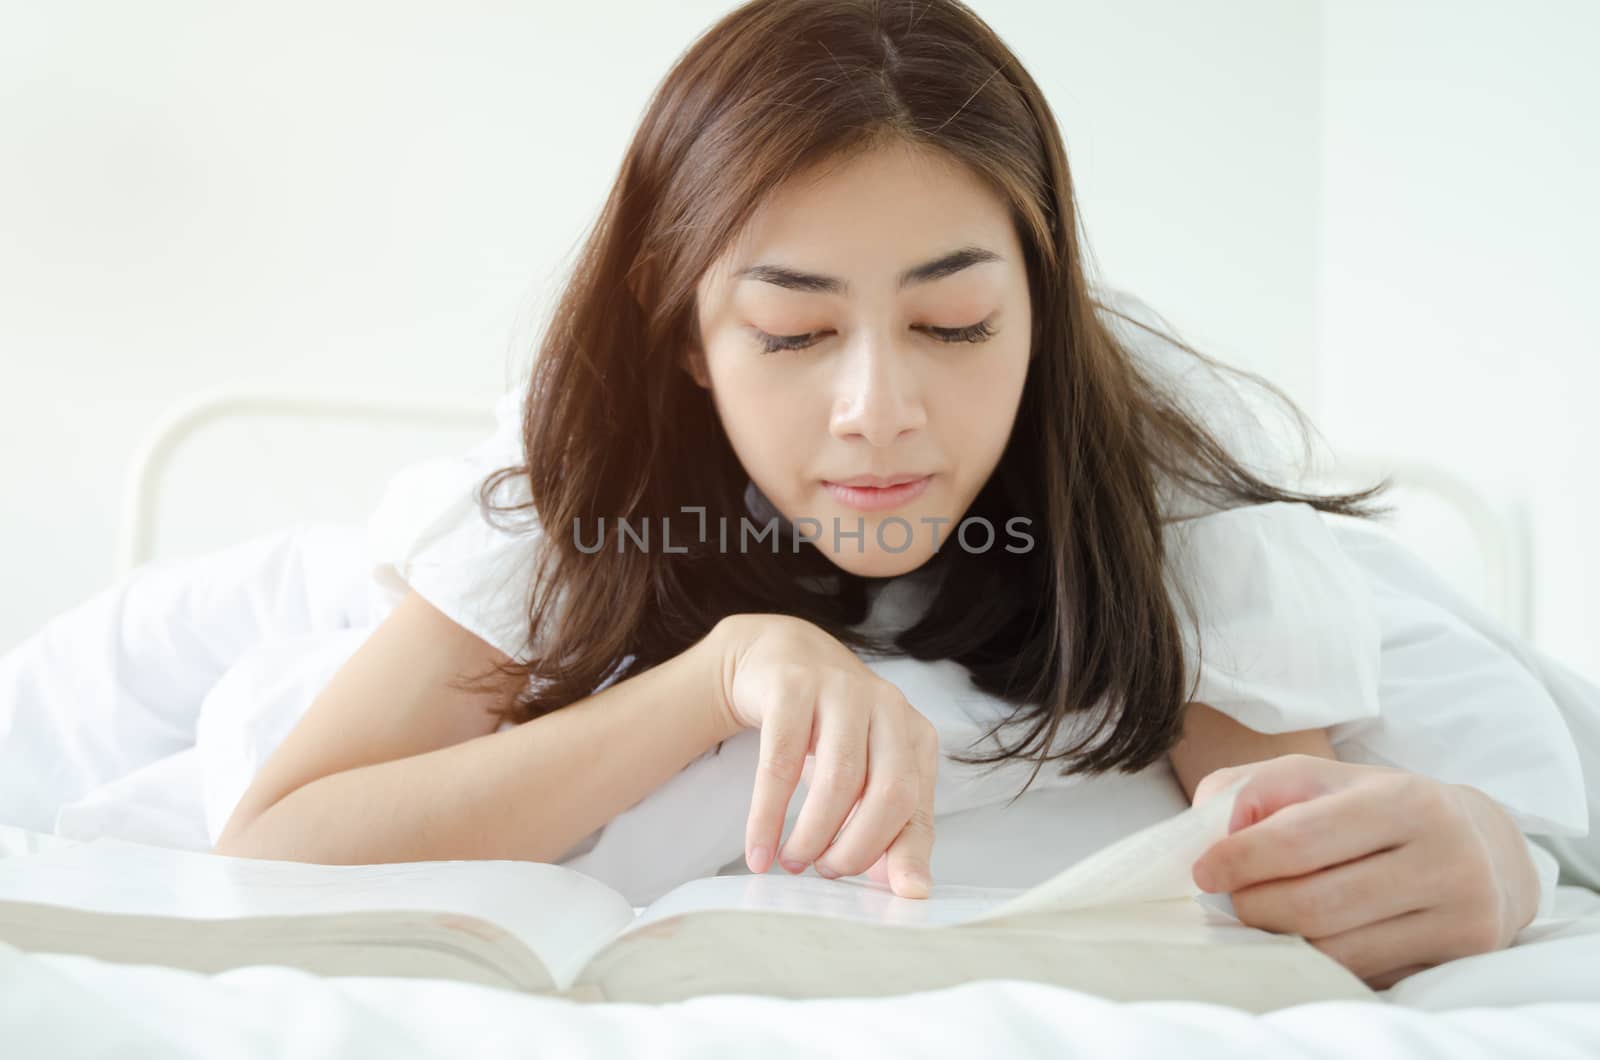 People read sleeping books. by enjoyok69